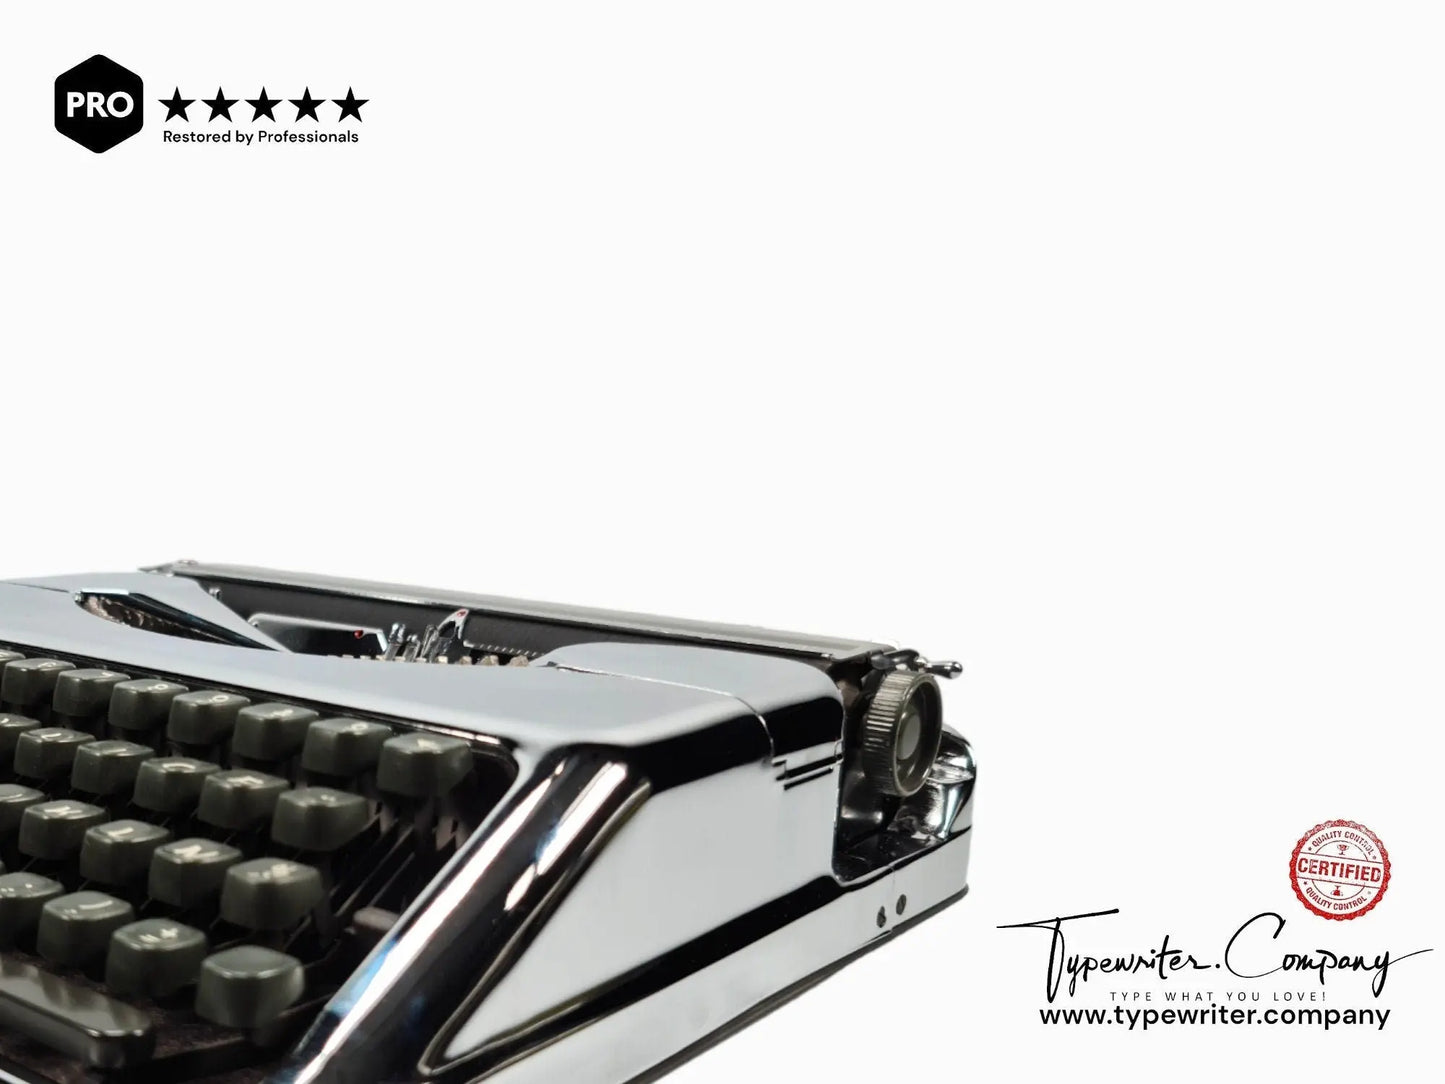 Limited Edition Hermes Baby Chrome-Plated Typewriter Serviced, dark - ElGranero Typewriter.Company